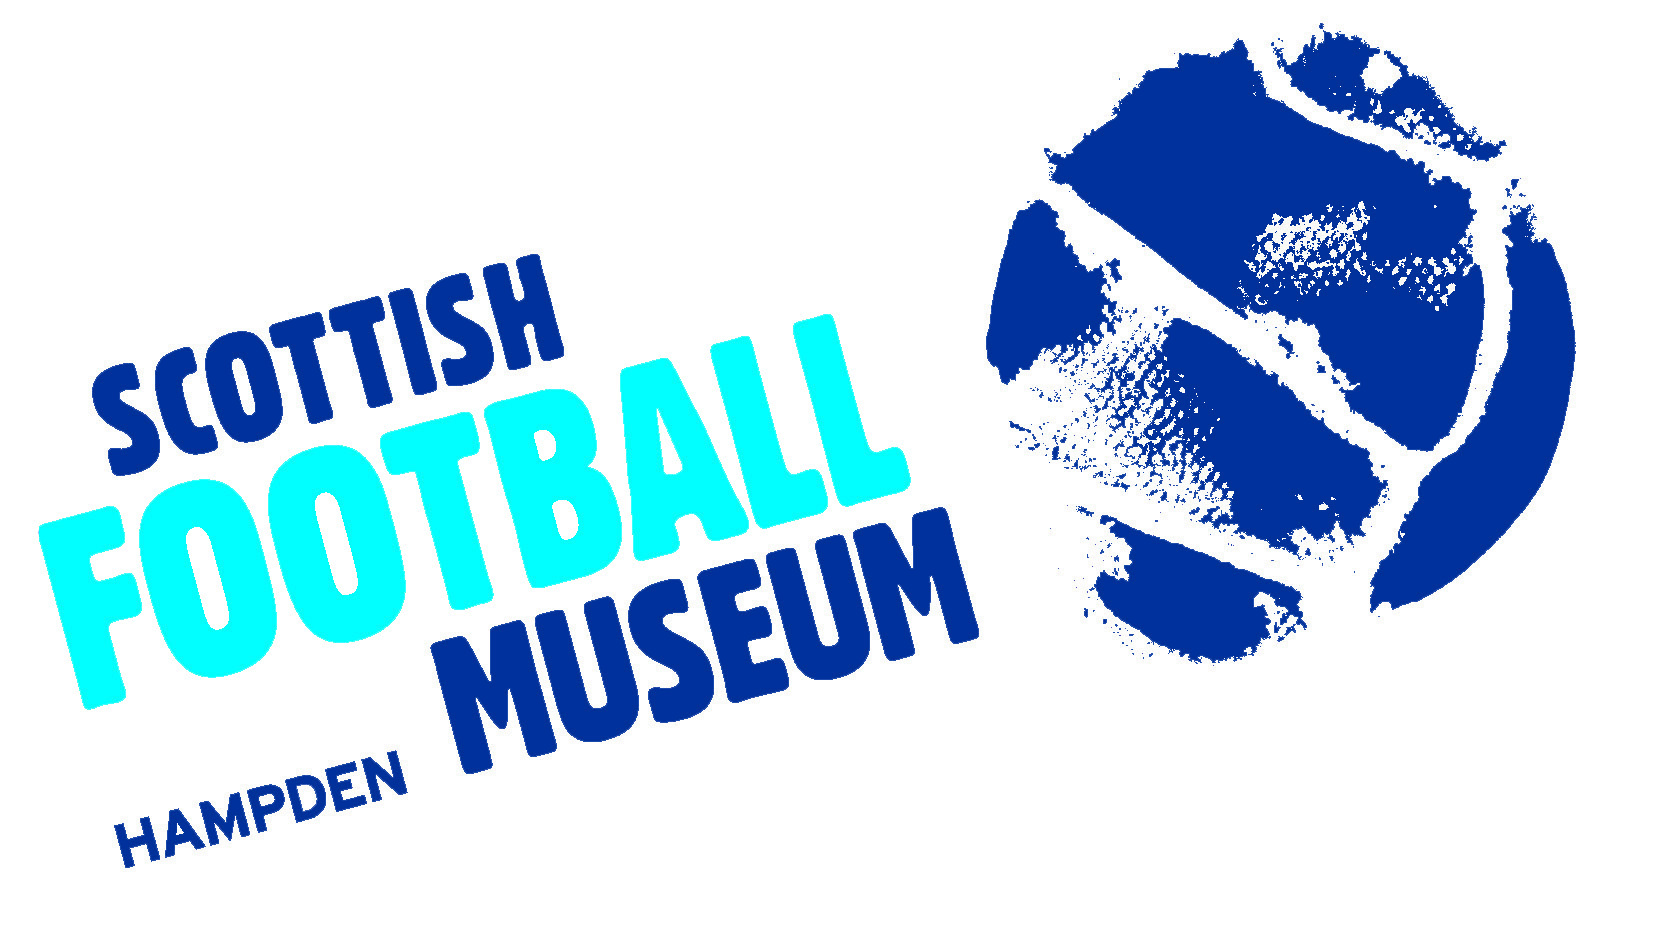 (c) Scottishfootballmuseum.org.uk